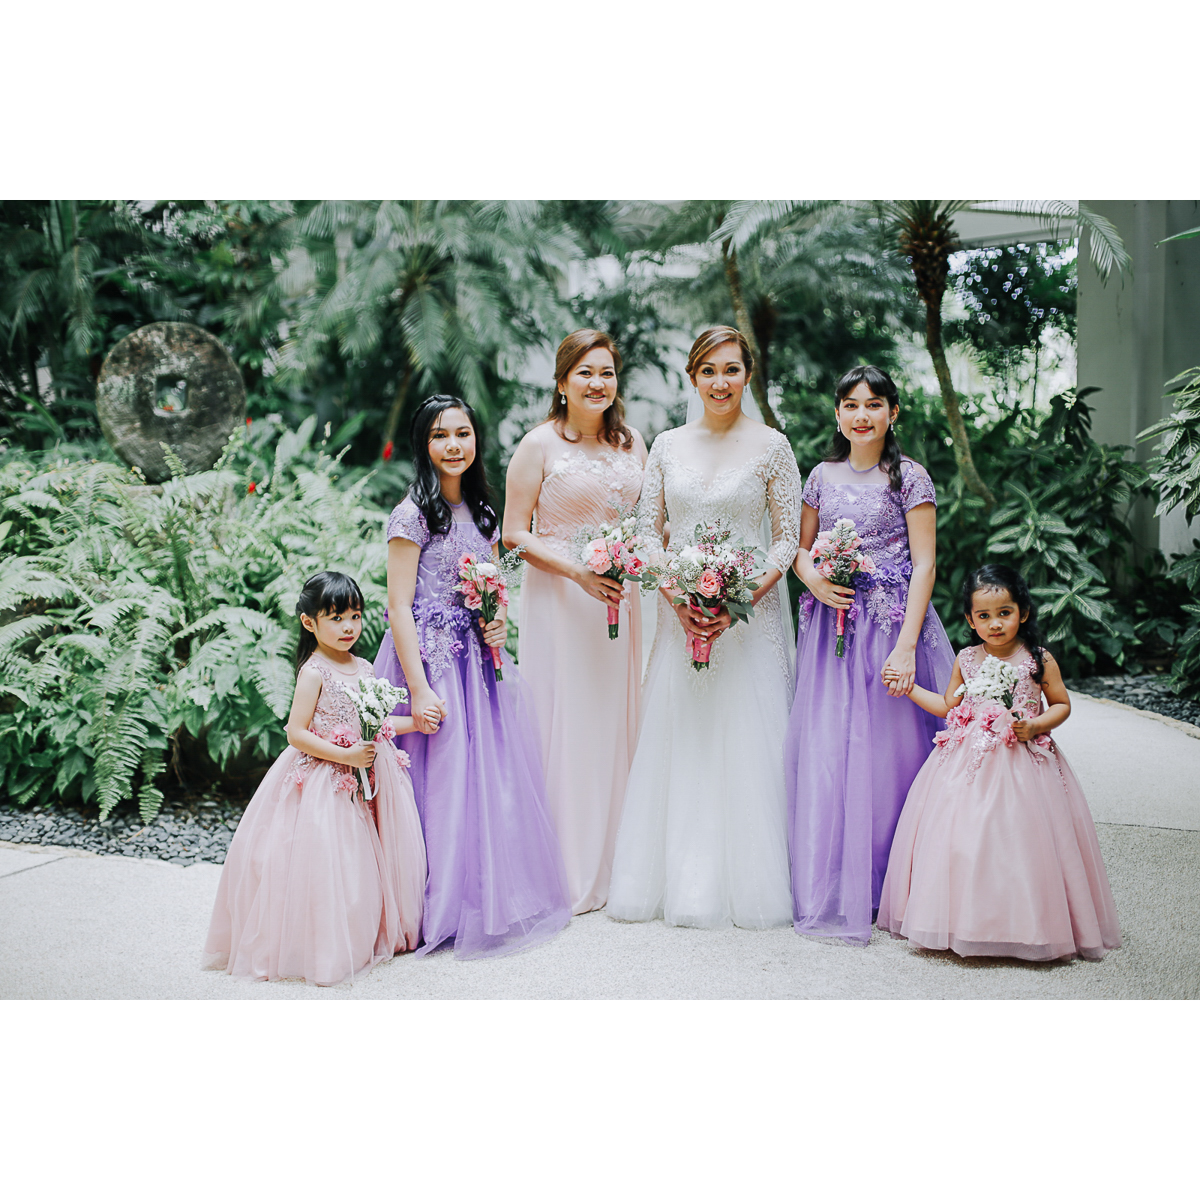 shang mactan wedding0038 - Coleen & Seigfred's Shangrila Mactan Cebu Destination Wedding